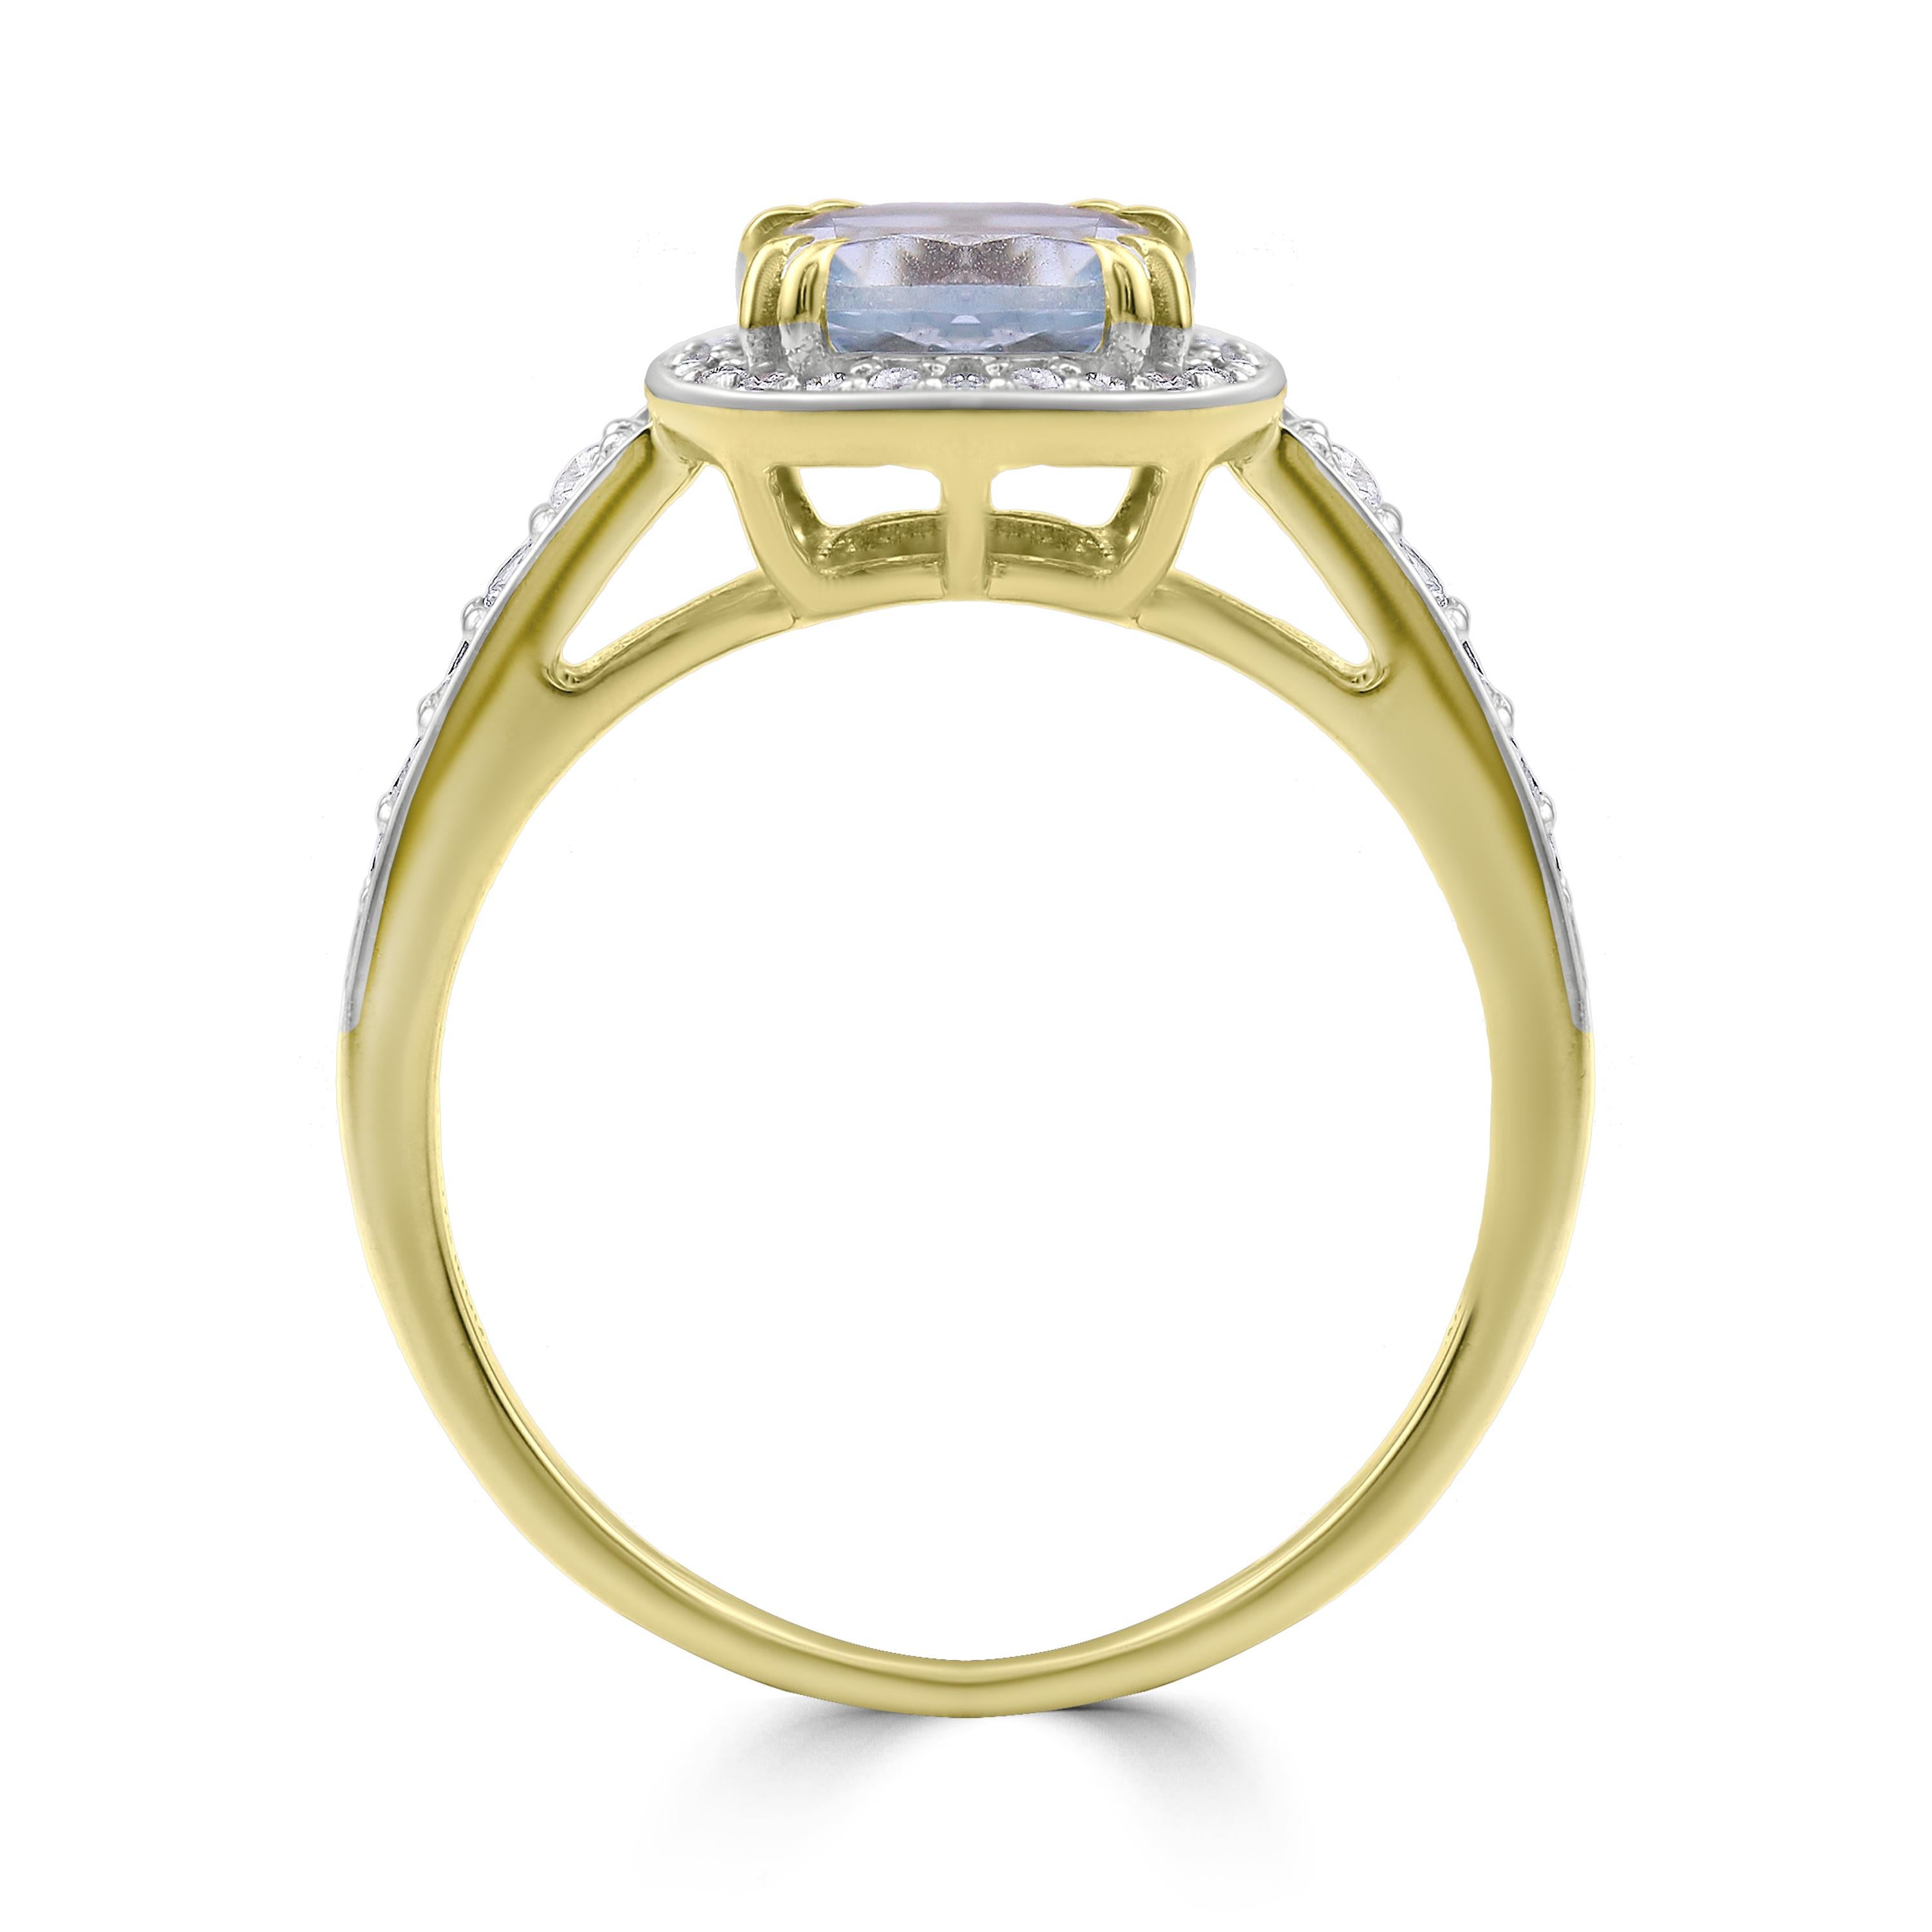 Gemistry 1.3 Carat Cushion Aquamarine Halo Solitaire Diamond Ring in 14K Gold 4